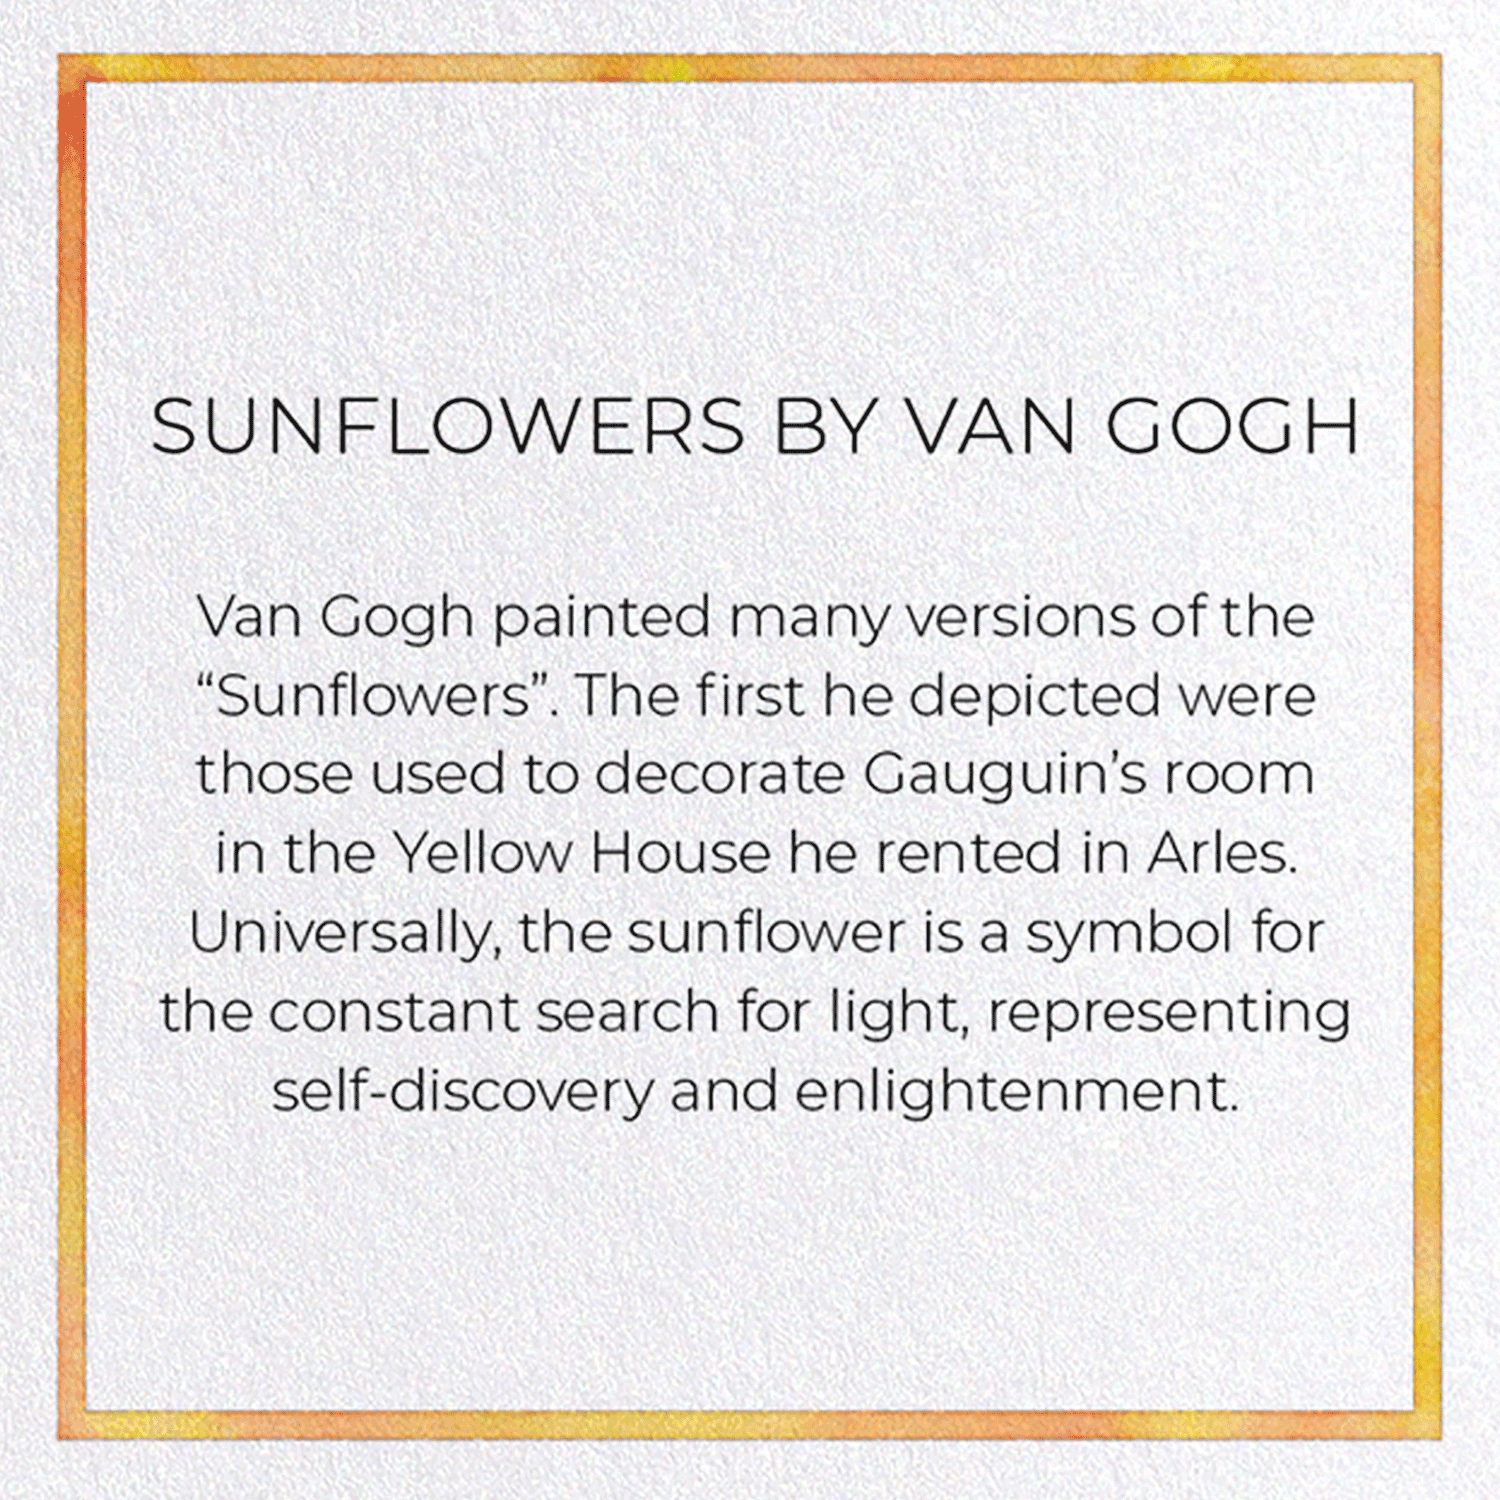 SUNFLOWERS BY VAN GOGH